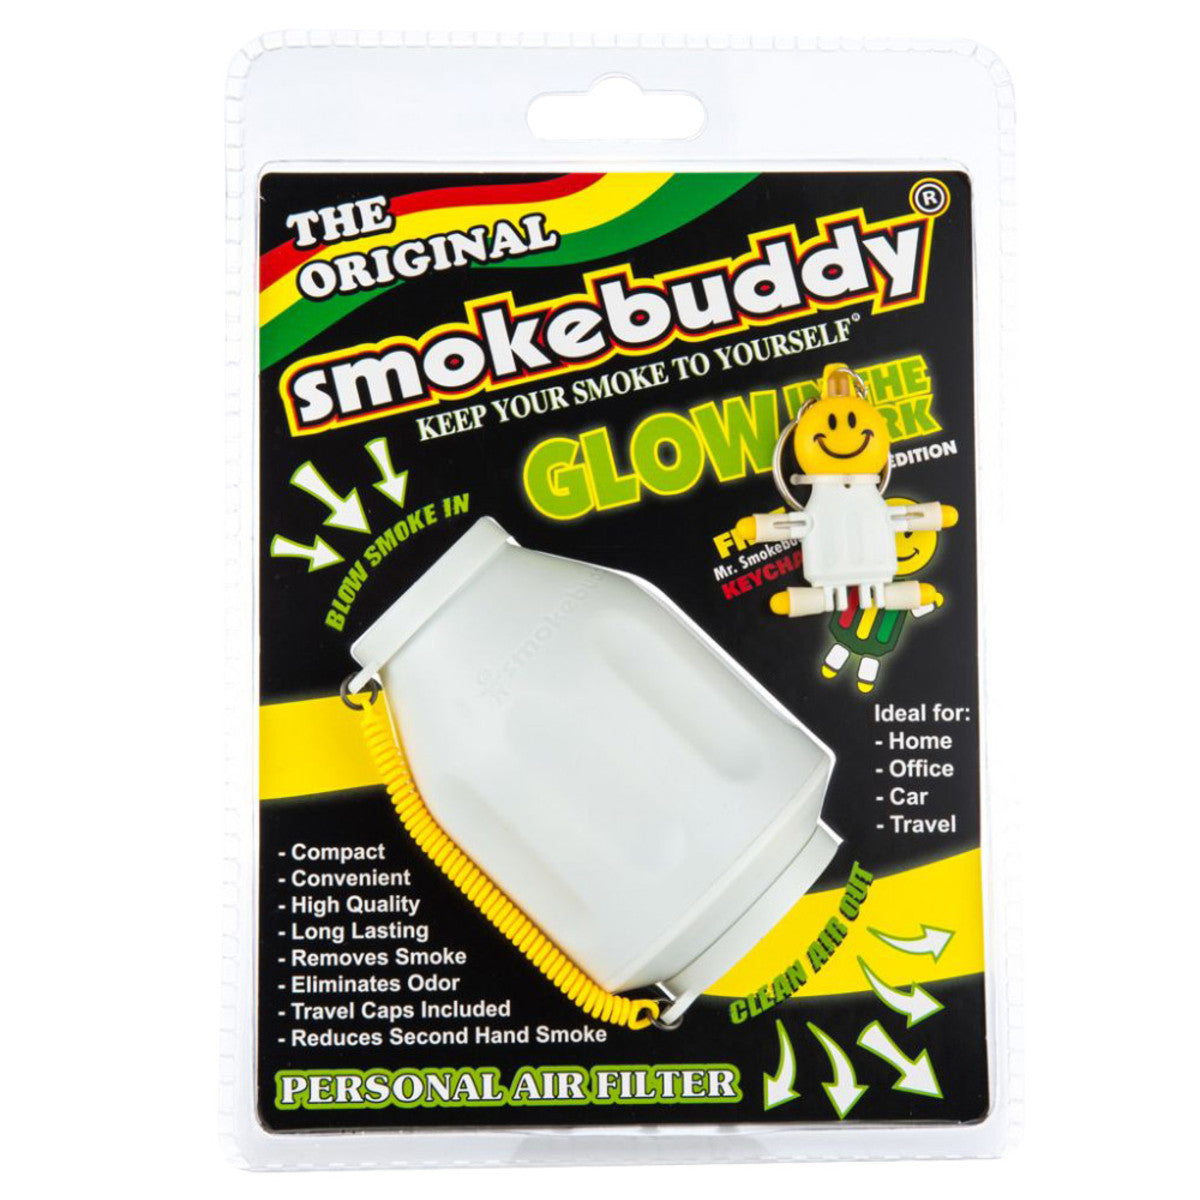 The Original Smoke Buddy - Personal Air Filter